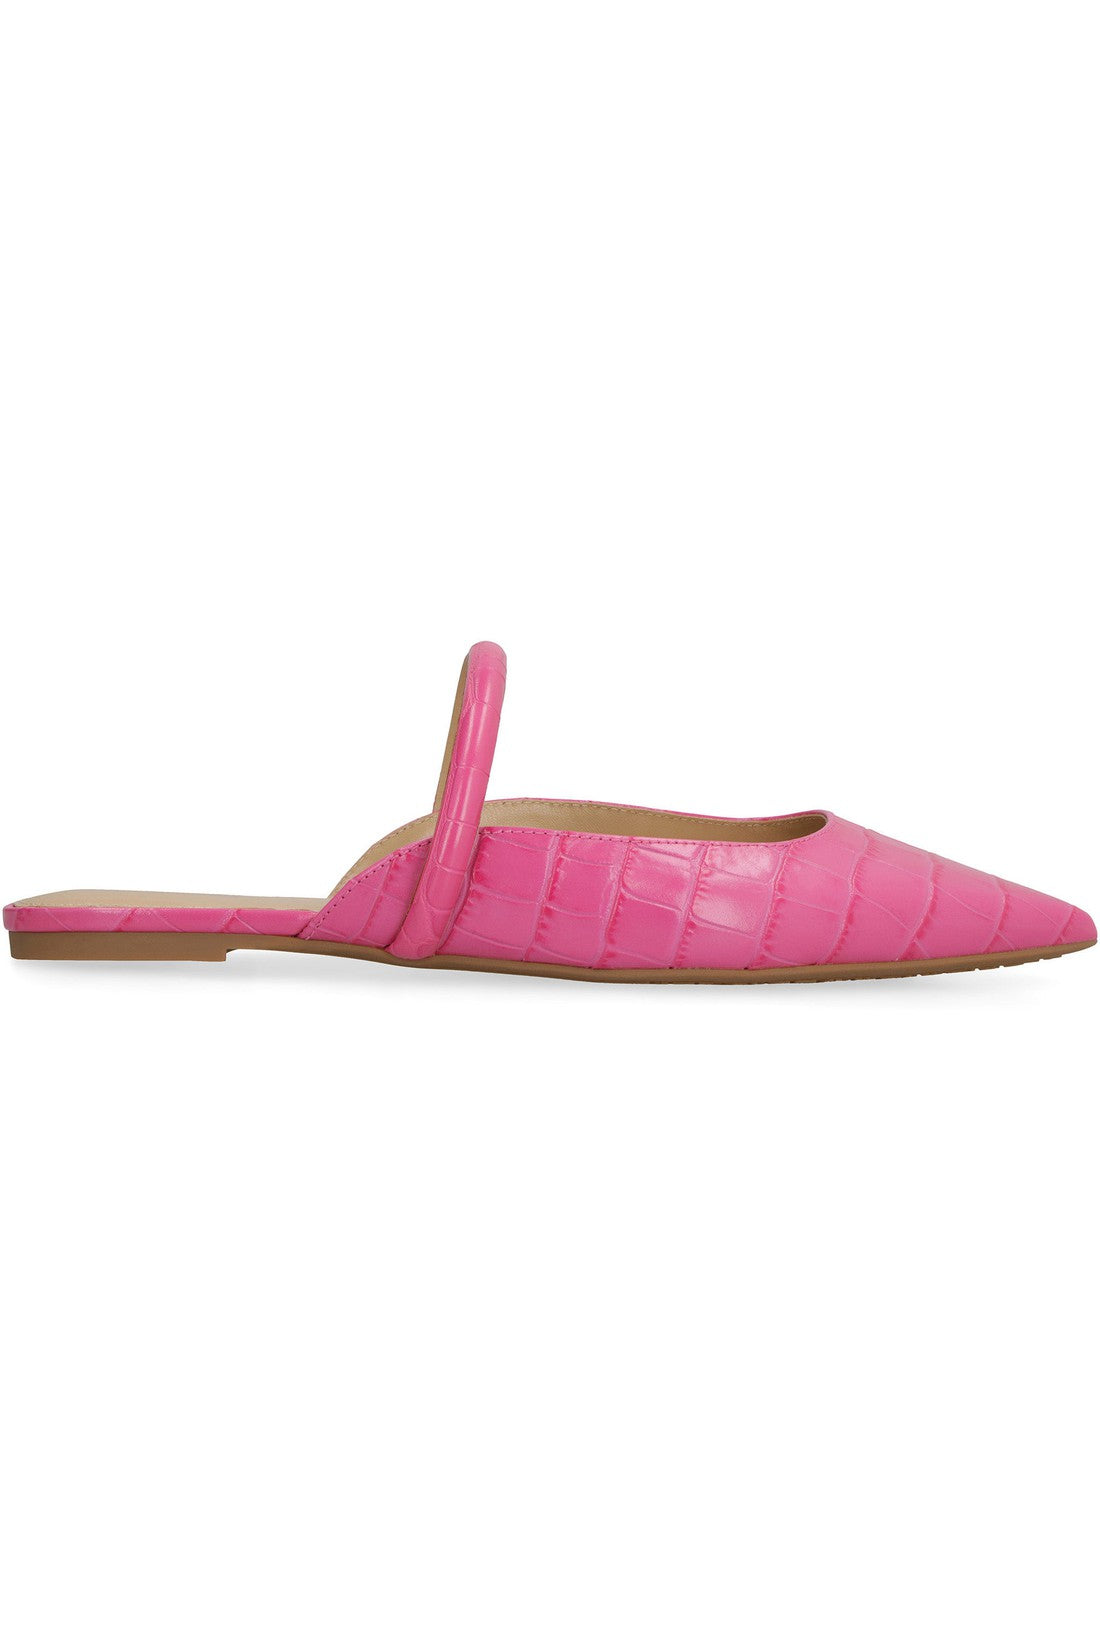 MICHAEL MICHAEL KORS-OUTLET-SALE-Jessa Flex leather pointy-toe slippers-ARCHIVIST